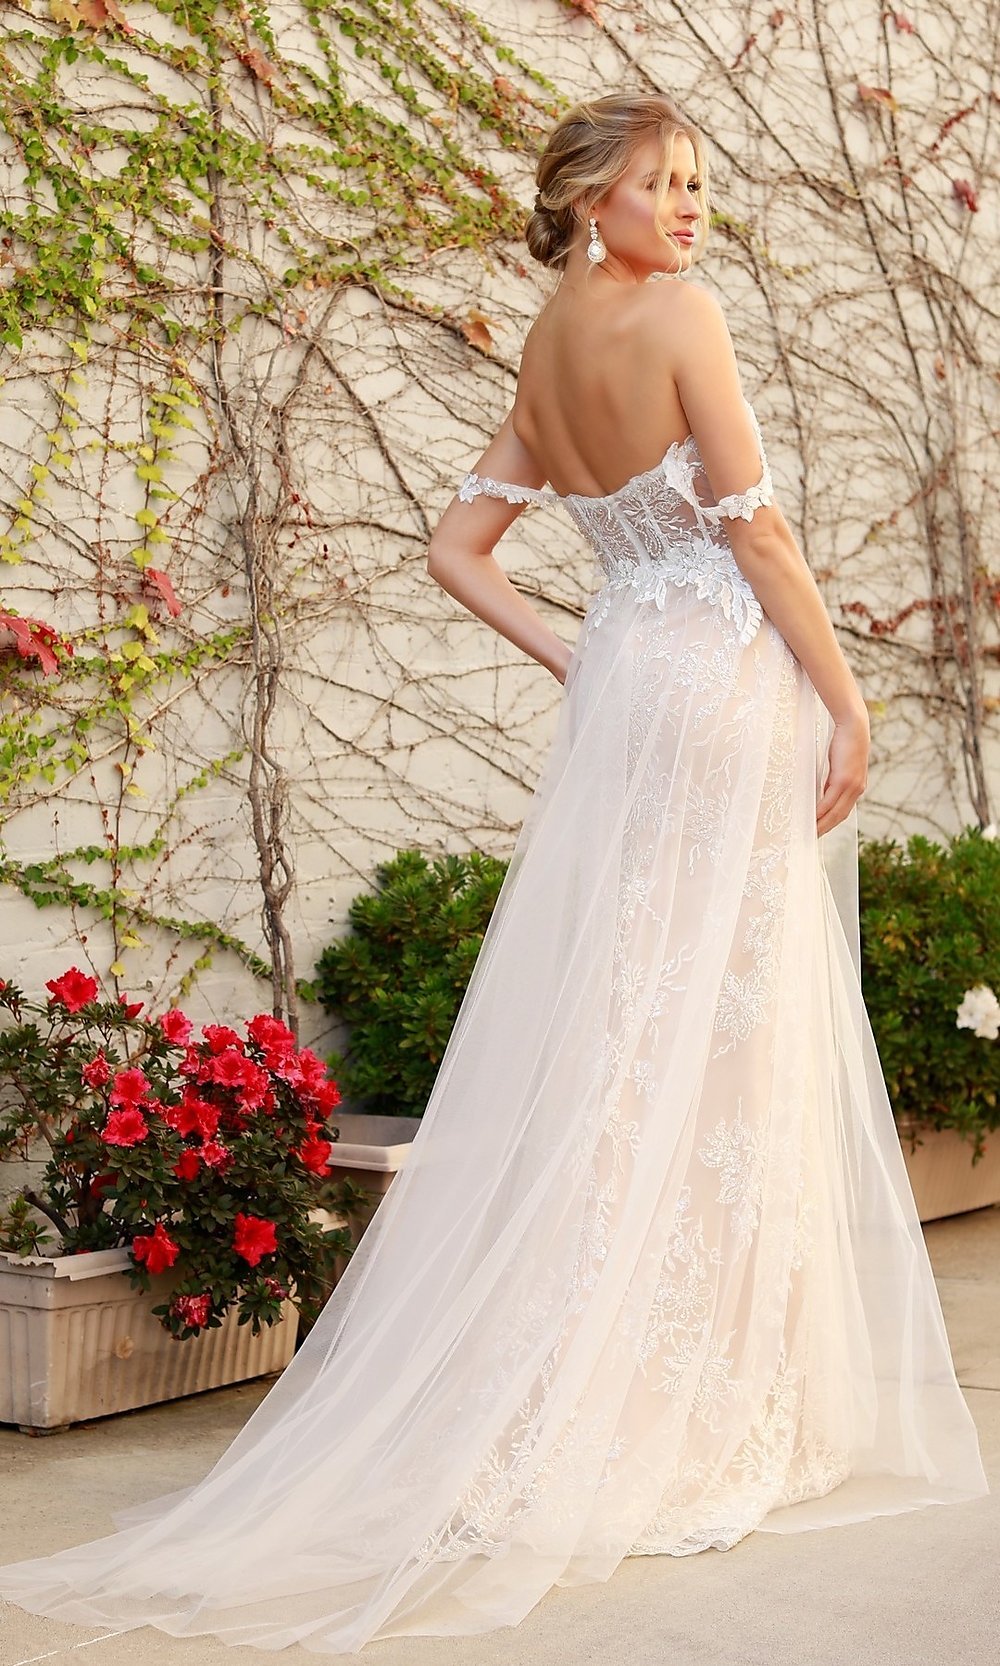 Embellished White Lace Long Prom Dress - PromGirl